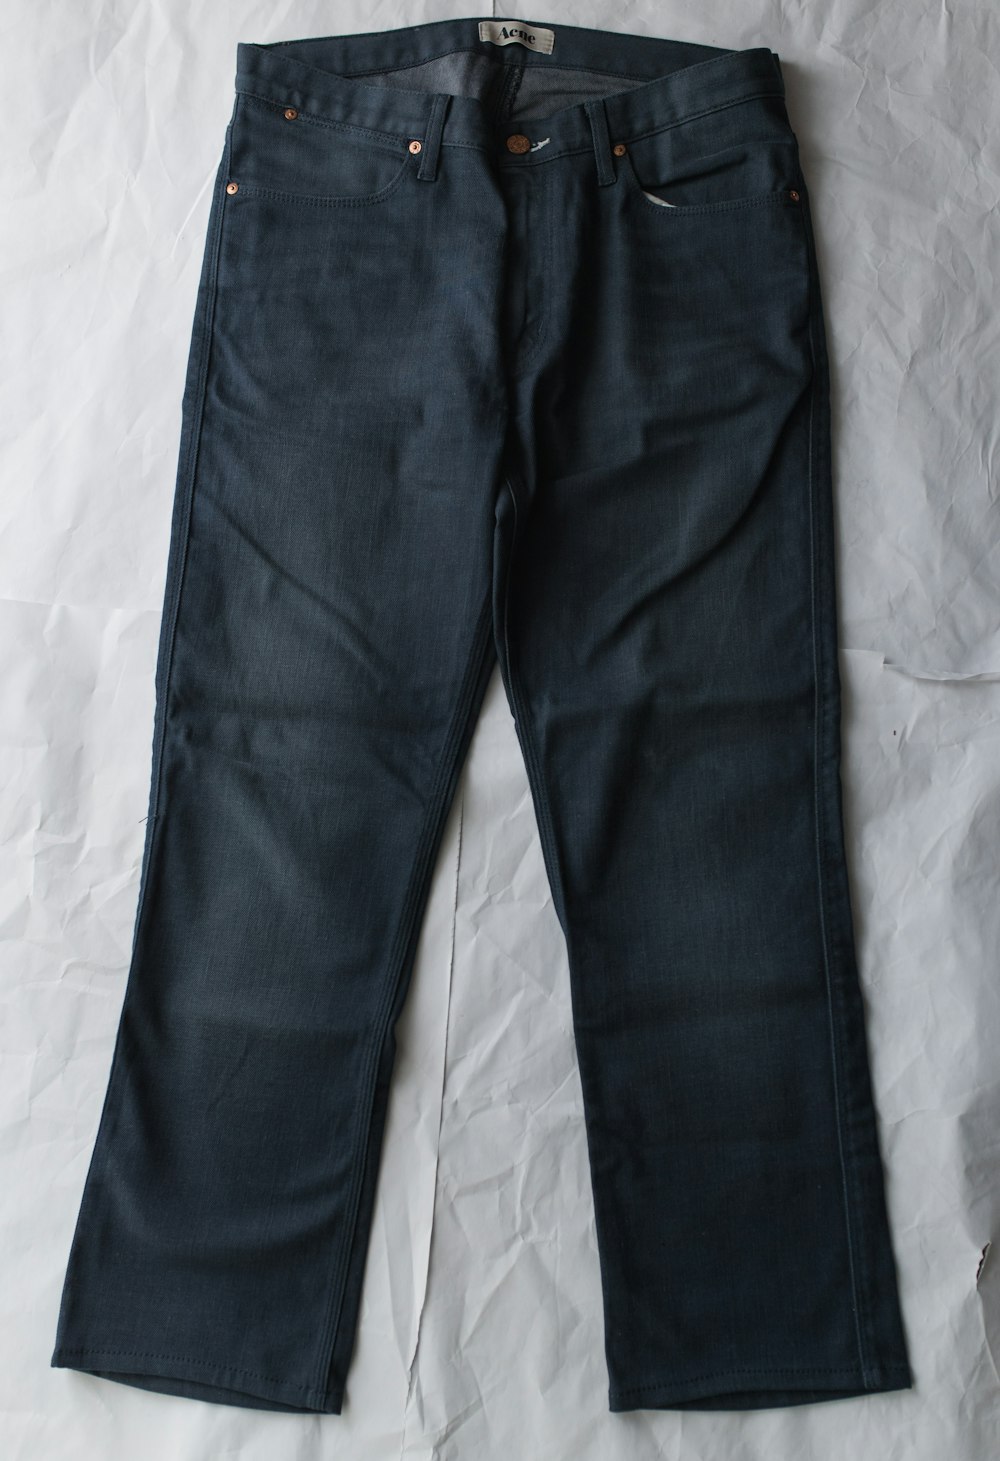 jean en denim bleu sur textile blanc